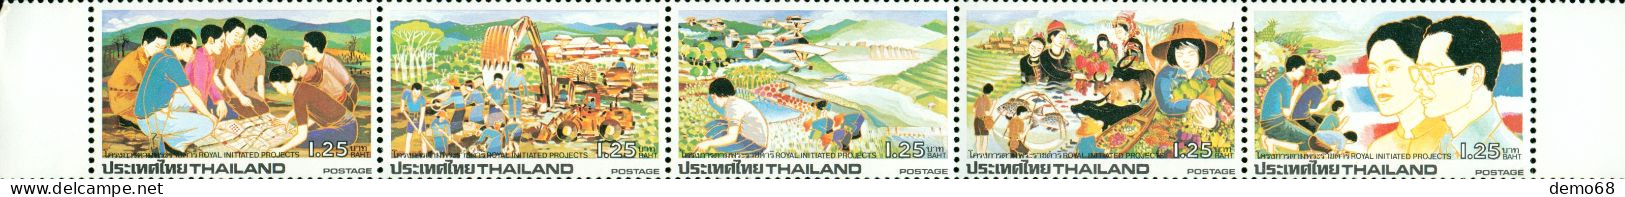 Thaïlande Thailand Bandeau De 5 Fives Stamp 1.25 Baht Timbres Neuf New - Thaïlande